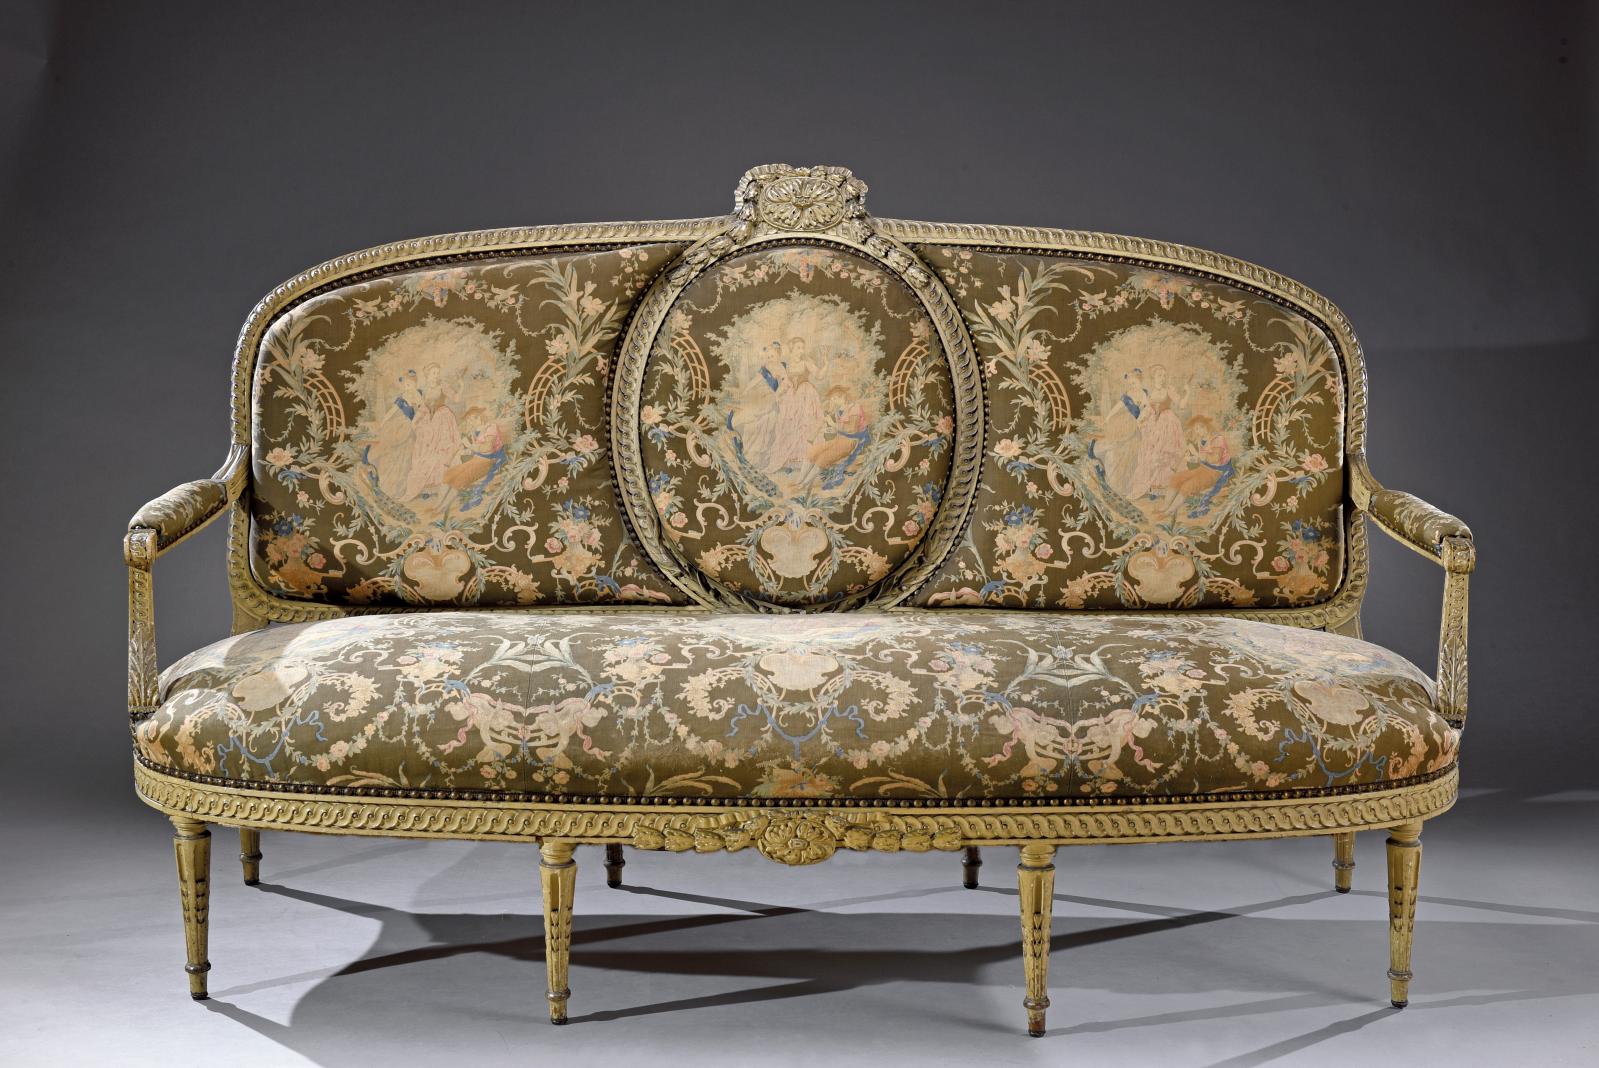 Opulent style Louis XVI